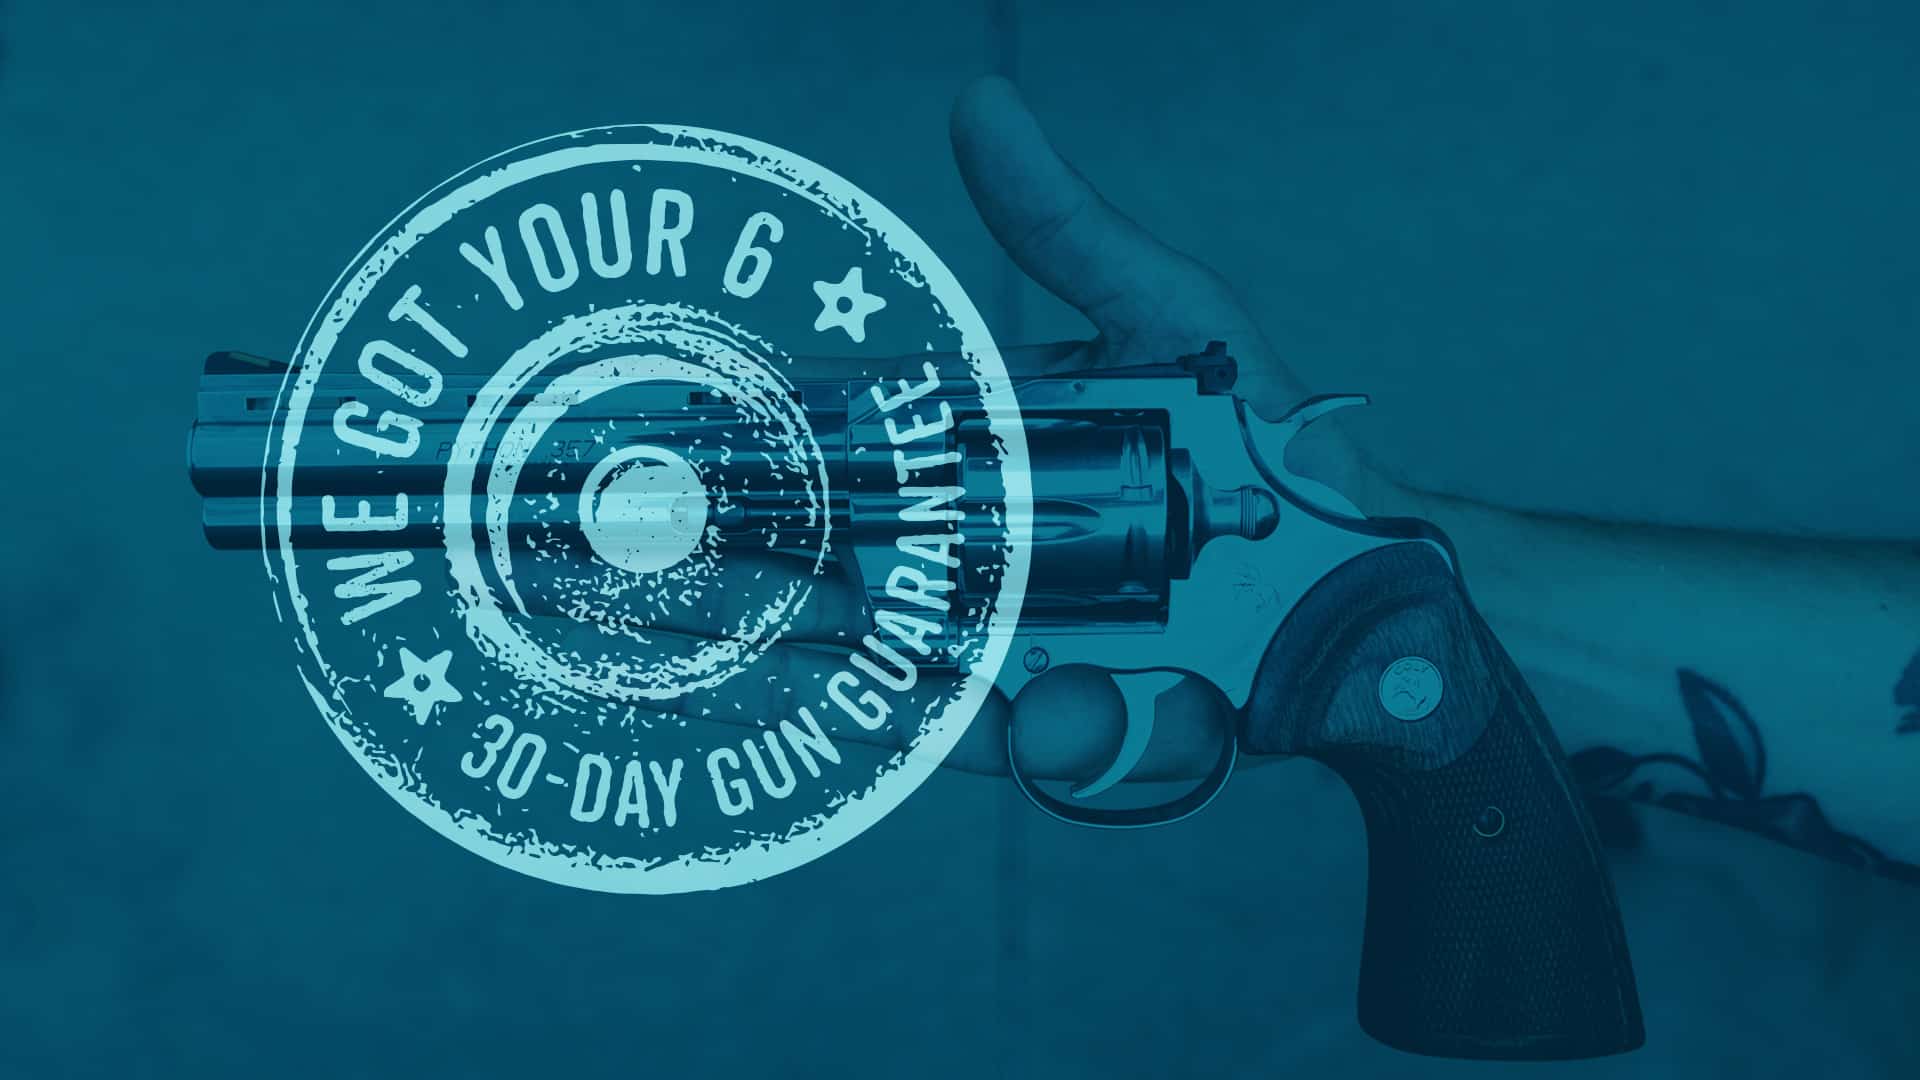 We Got Your Siz, 30-day gun guarantee